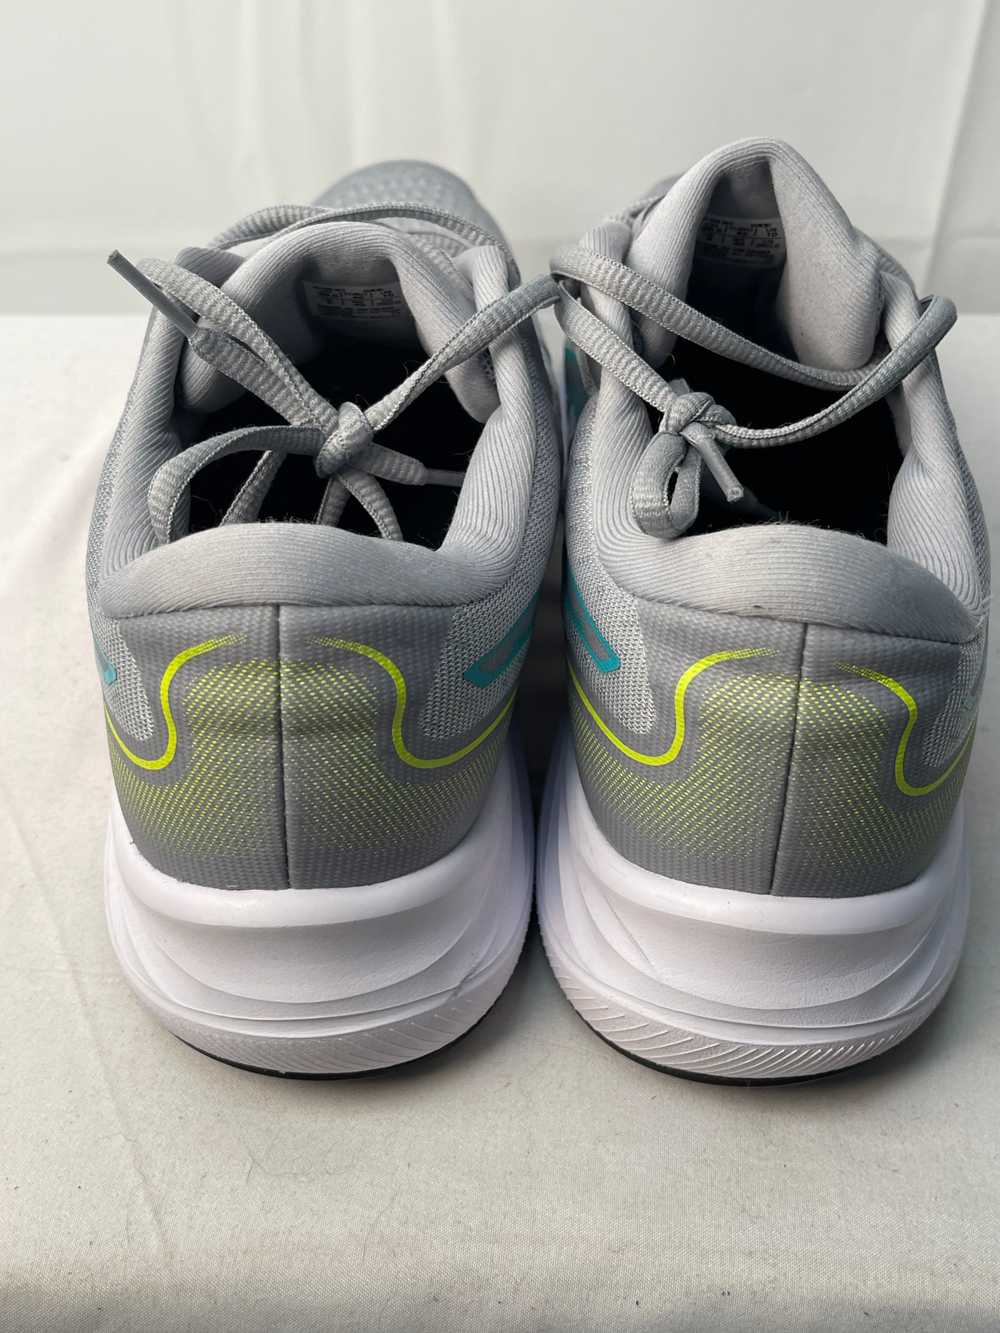 Asics Women's Gray Ortholite Sneakers Size 10 - image 2